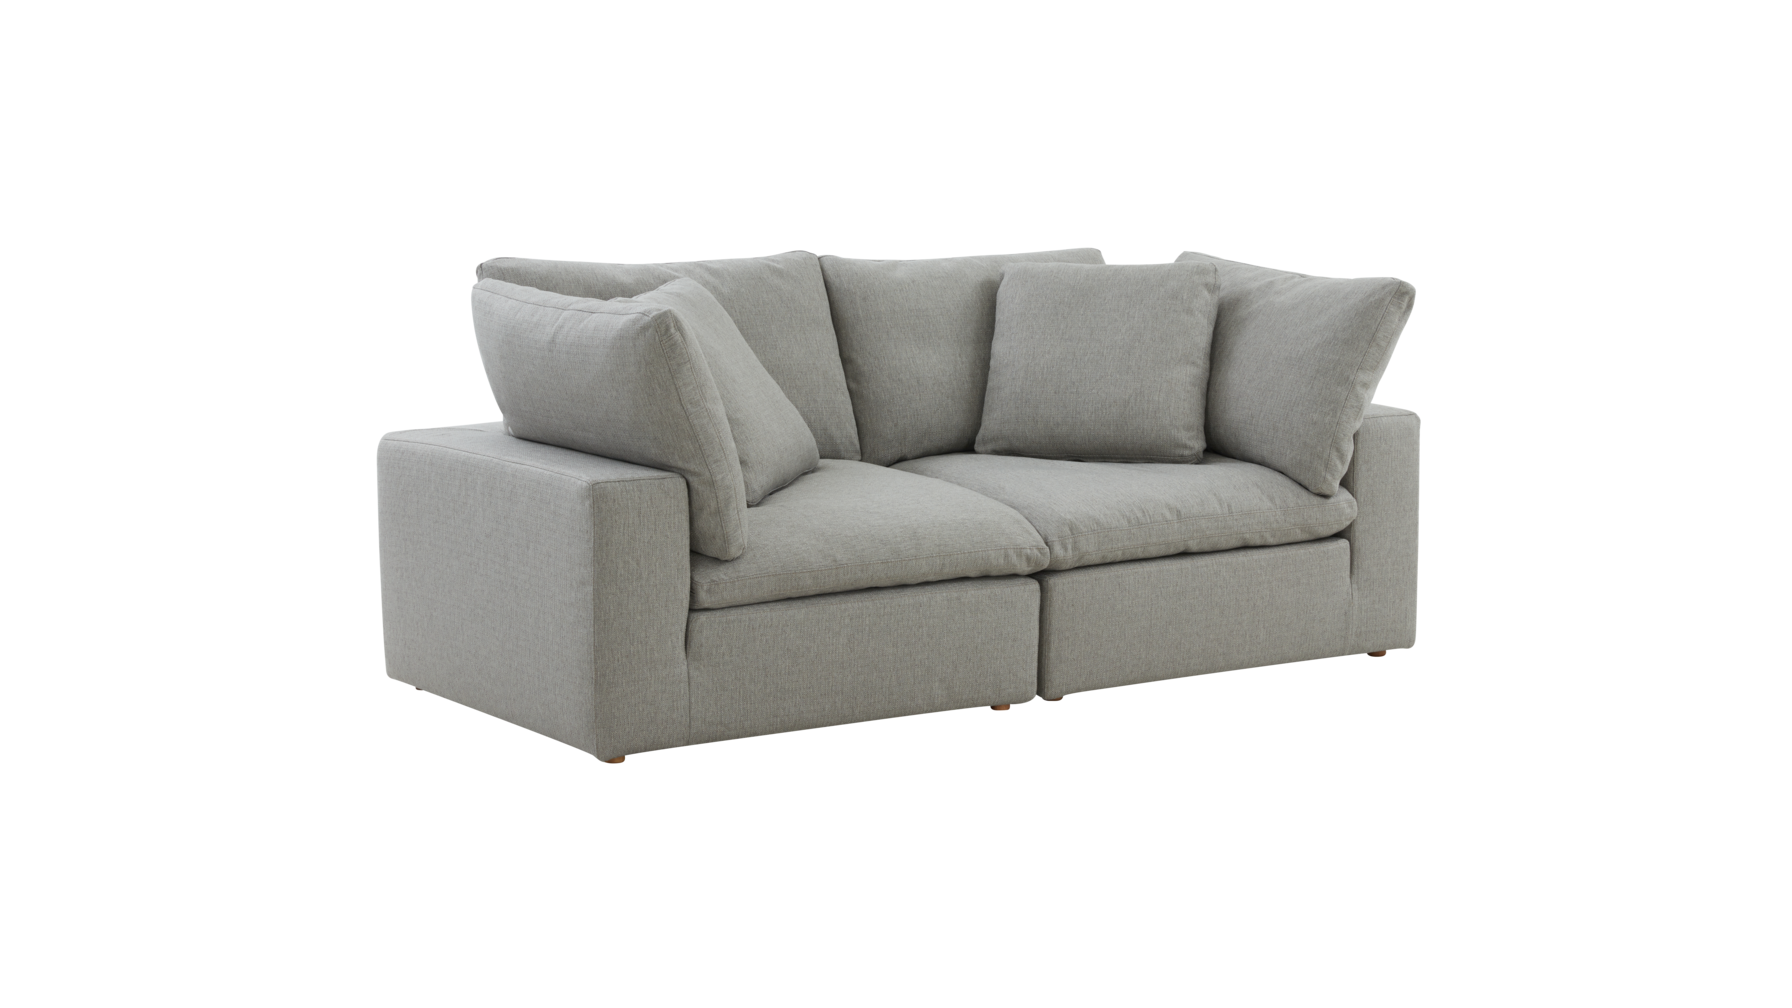 Movie Night™ 2 Piece Modular Sofa, Standard, Mist - Image 2